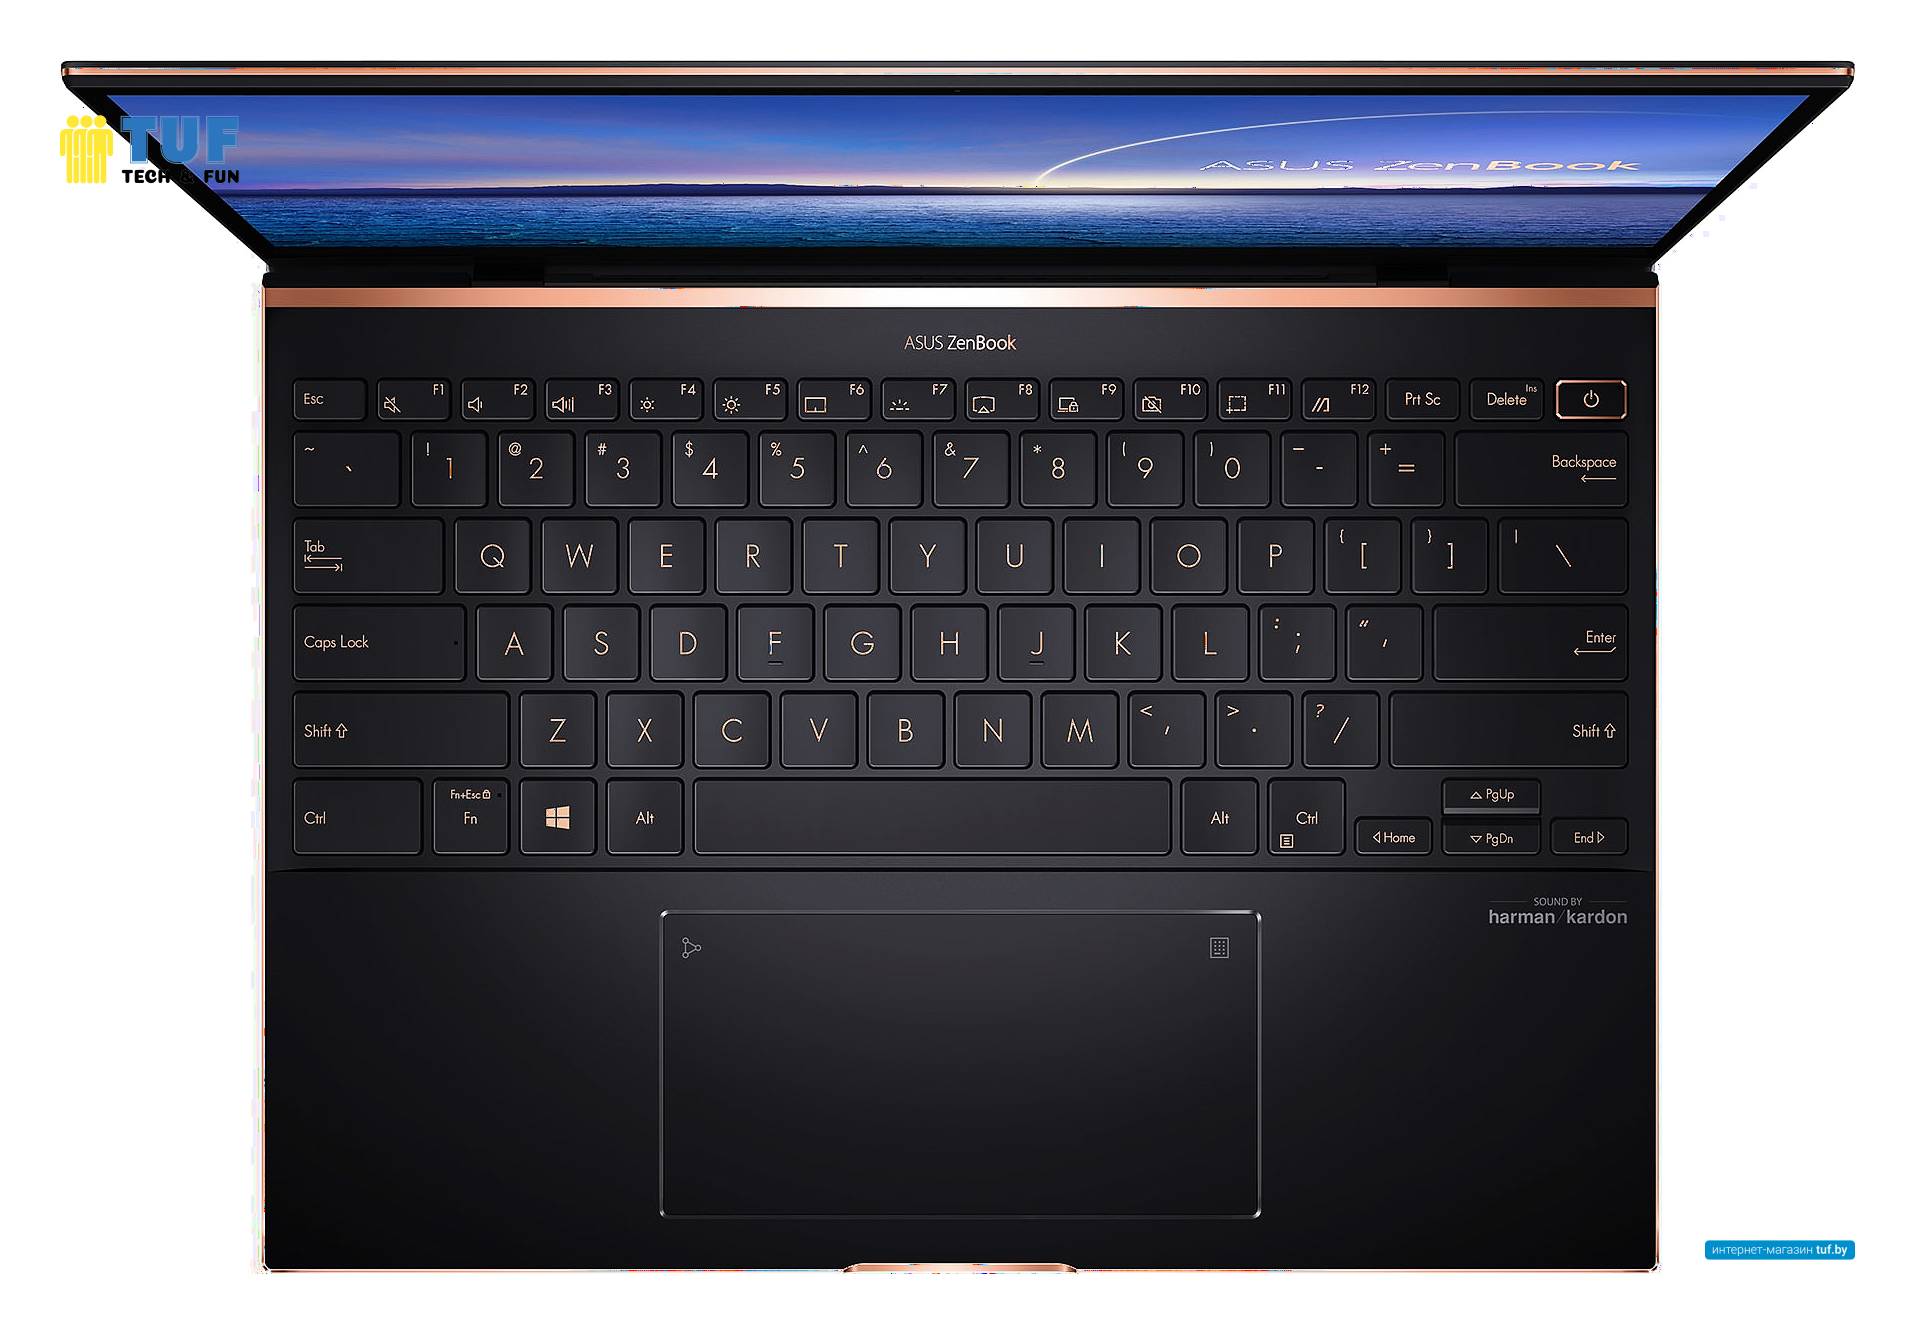 Ноутбук ASUS ZenBook S UX393EA-HK019R